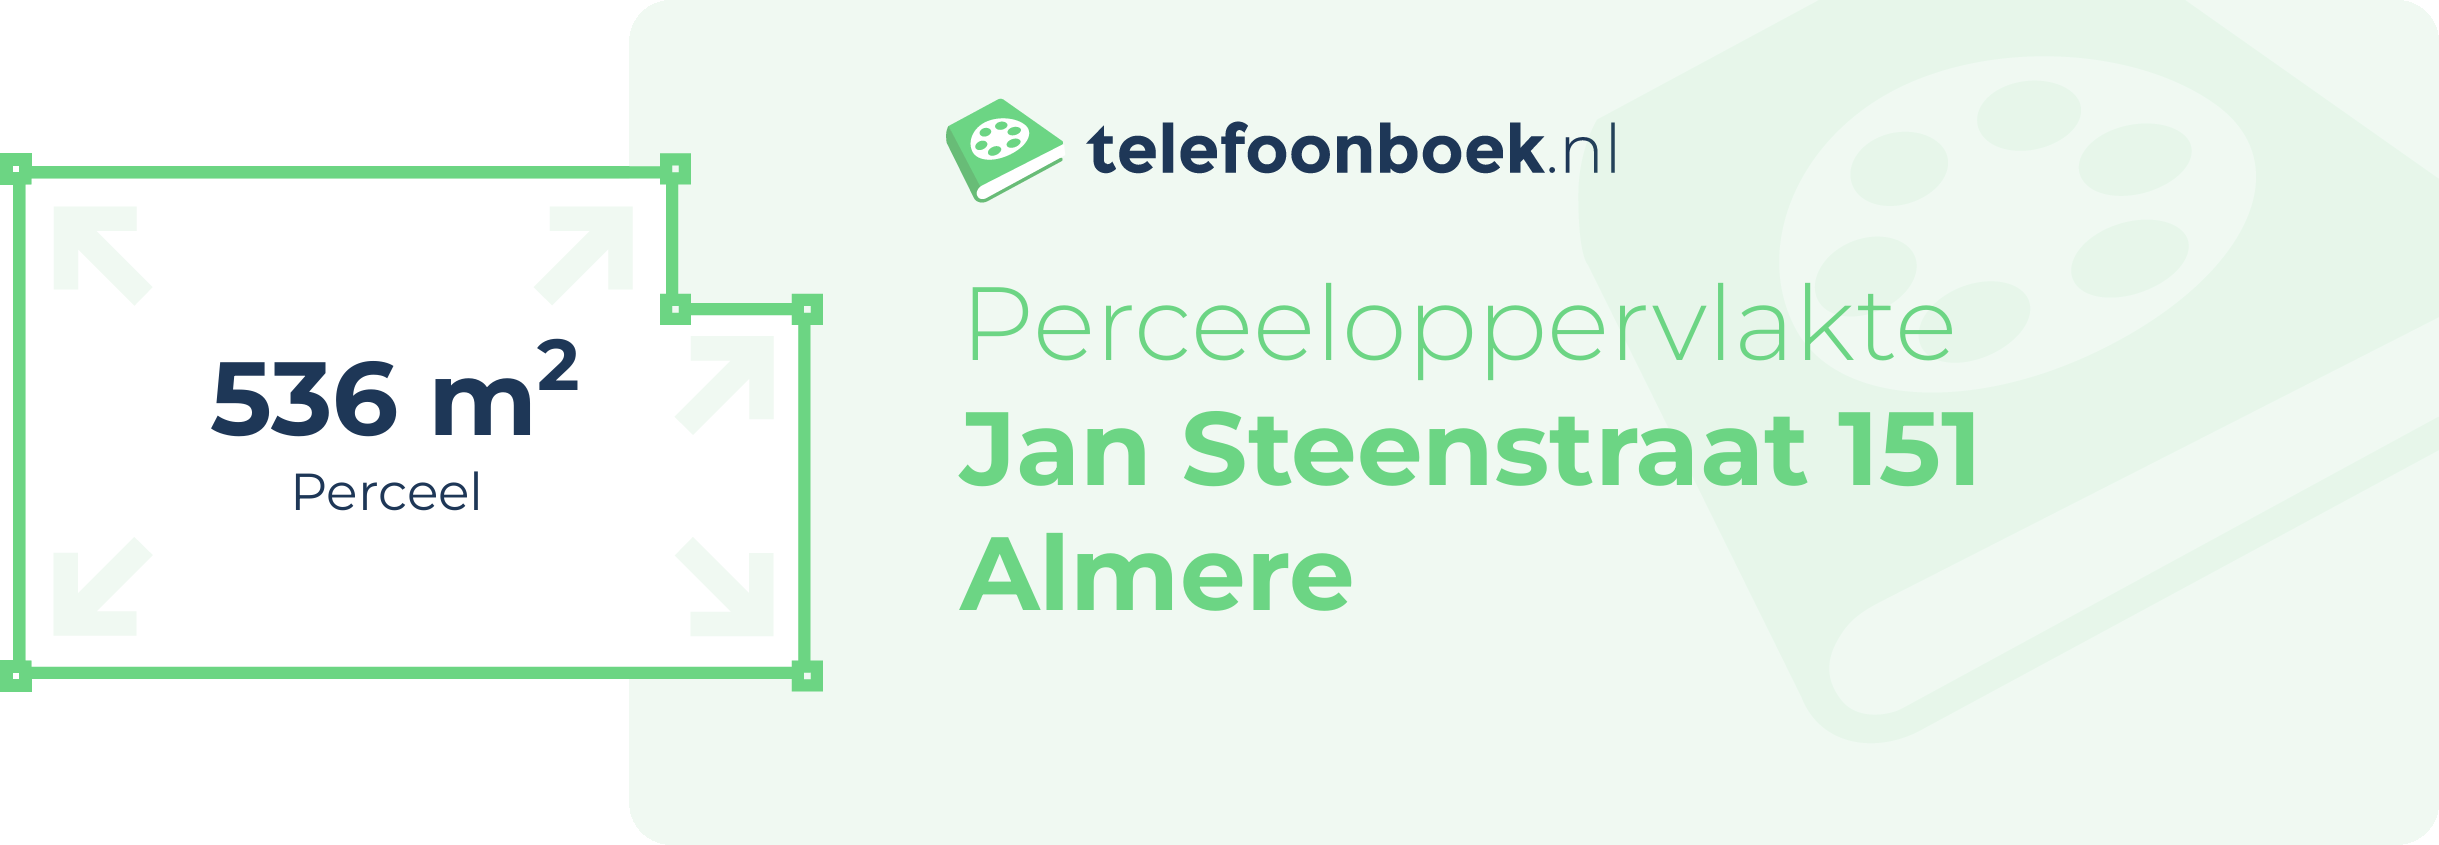 Perceeloppervlakte Jan Steenstraat 151 Almere